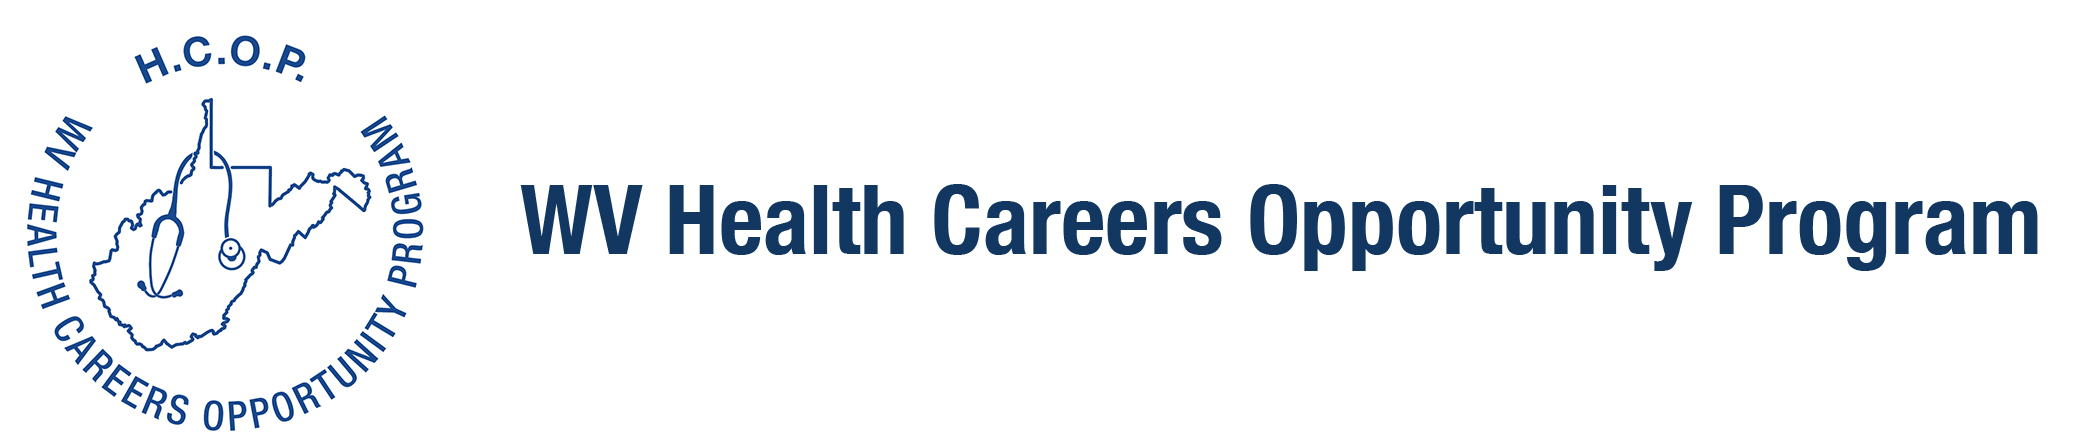 Health Careers Opportunity Program logo